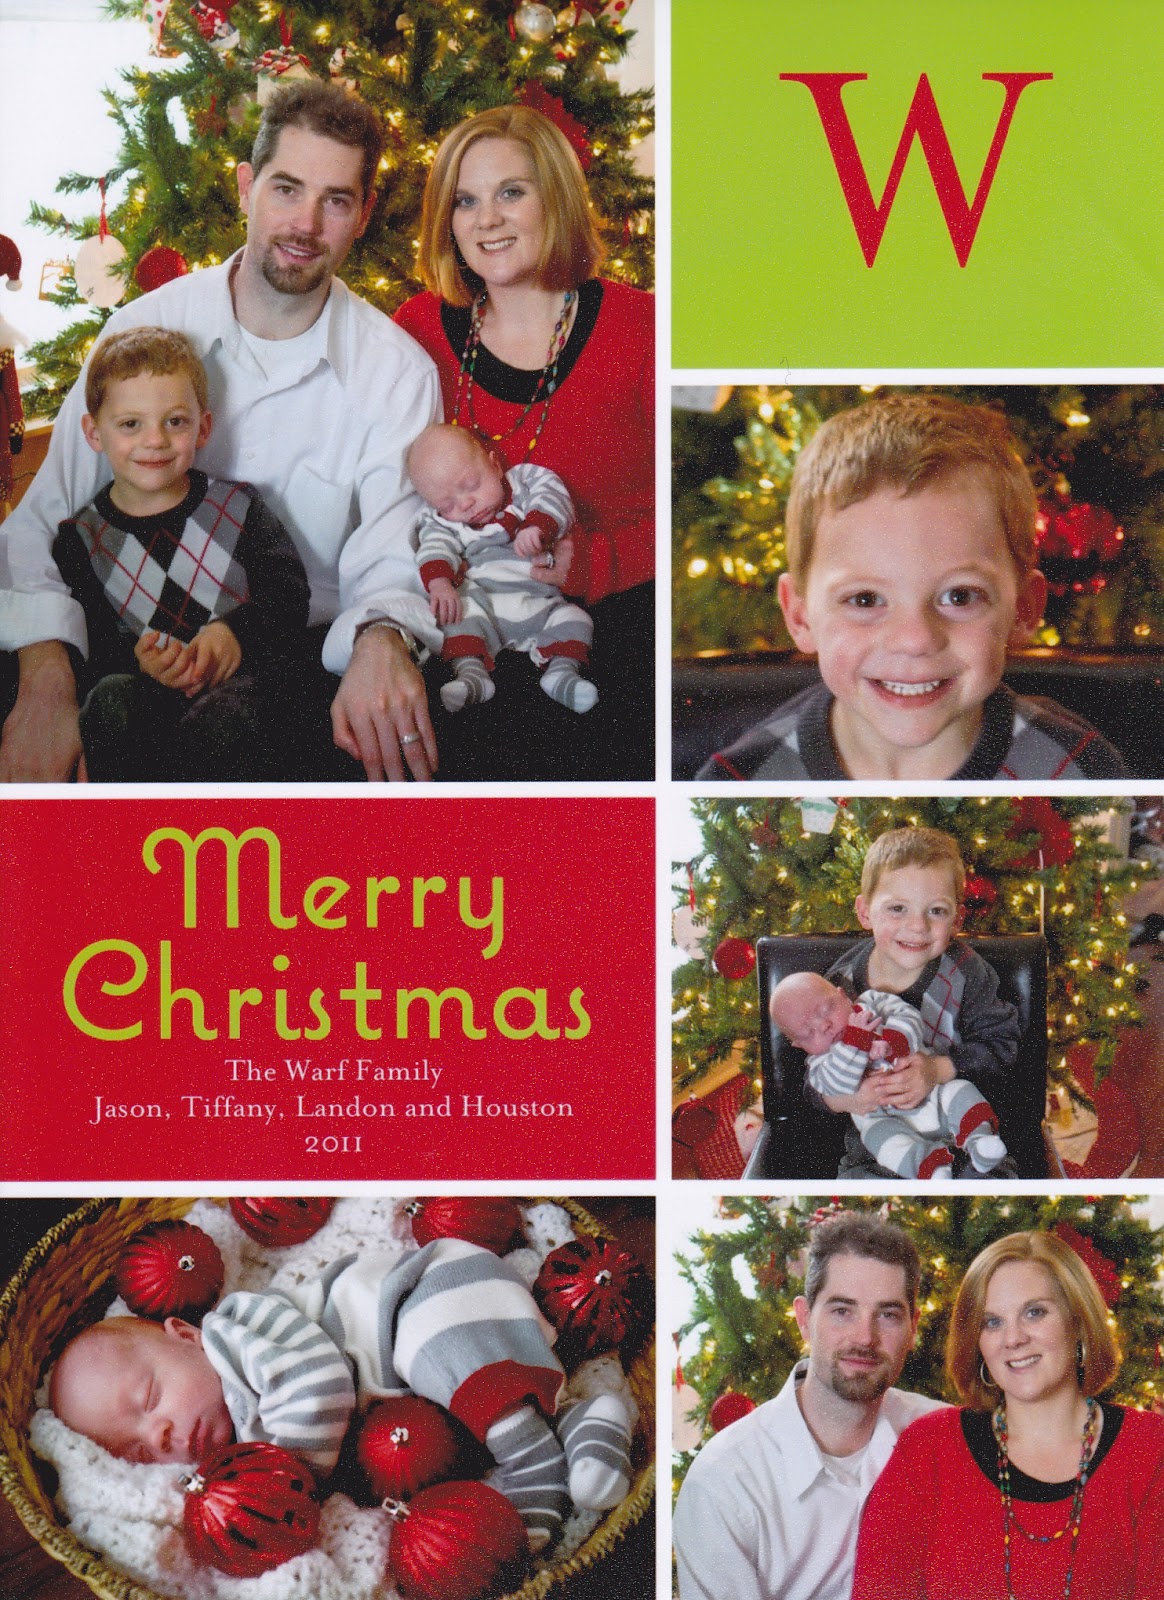 Bug Bites and Boo Boos: Family Christmas pictures and Christmas card